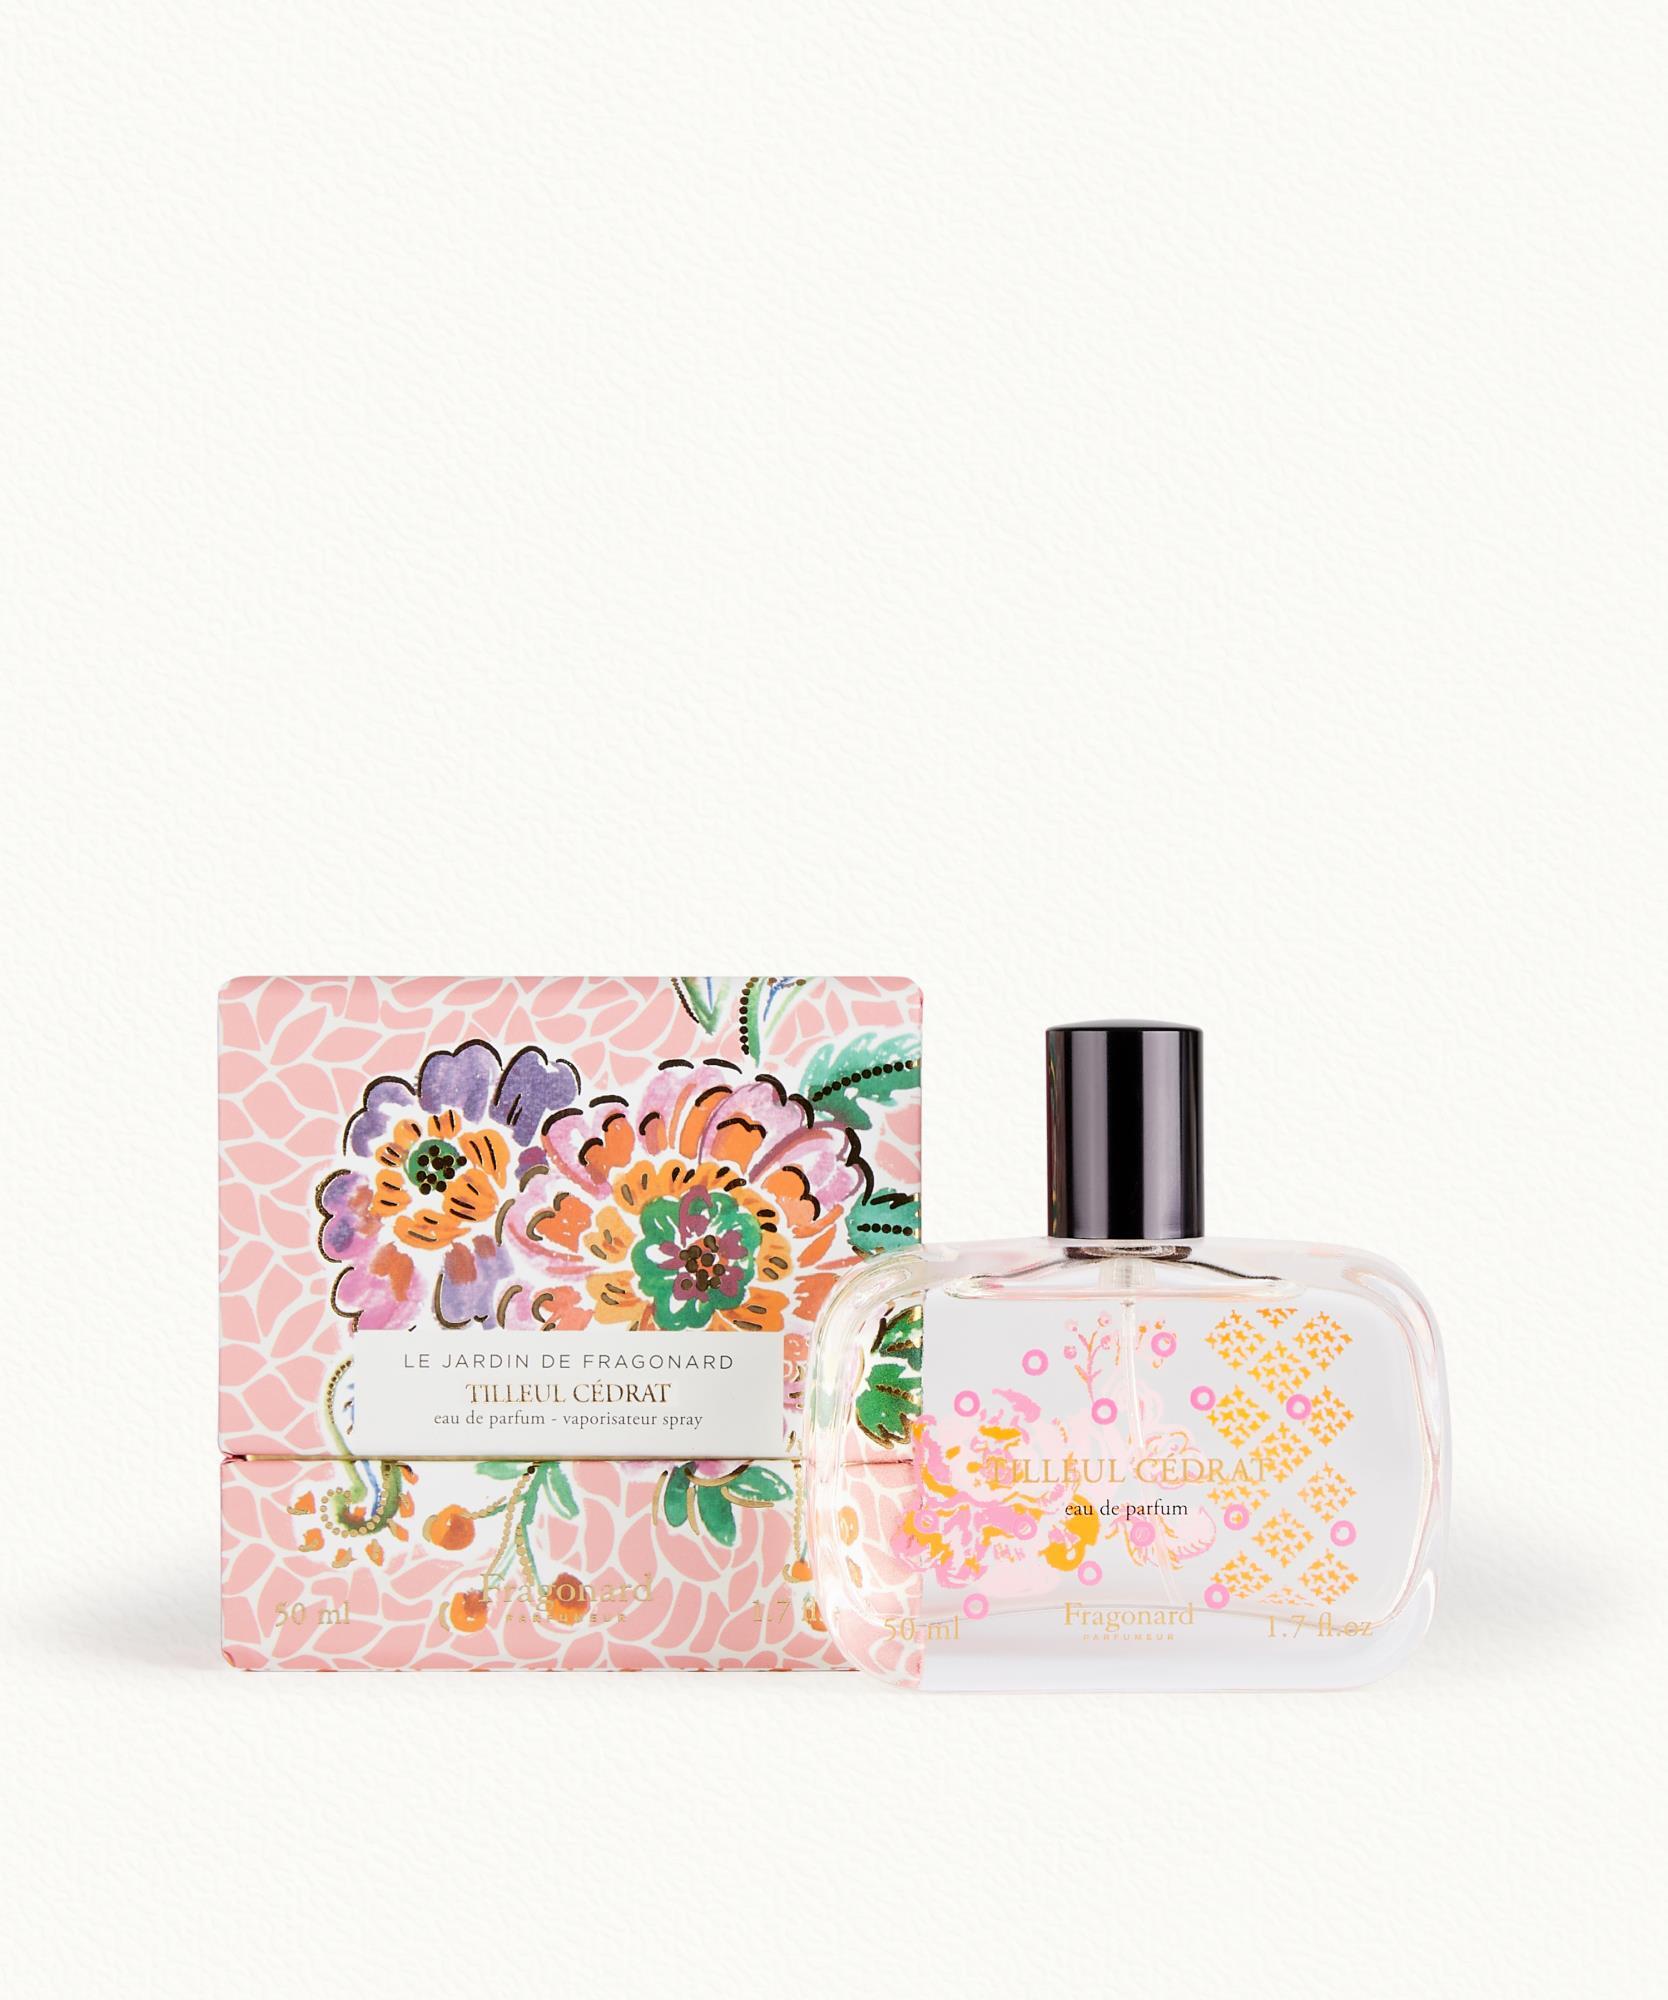 Tilleul Cédrat Eau de Parfum Fragonard - $ 65.00